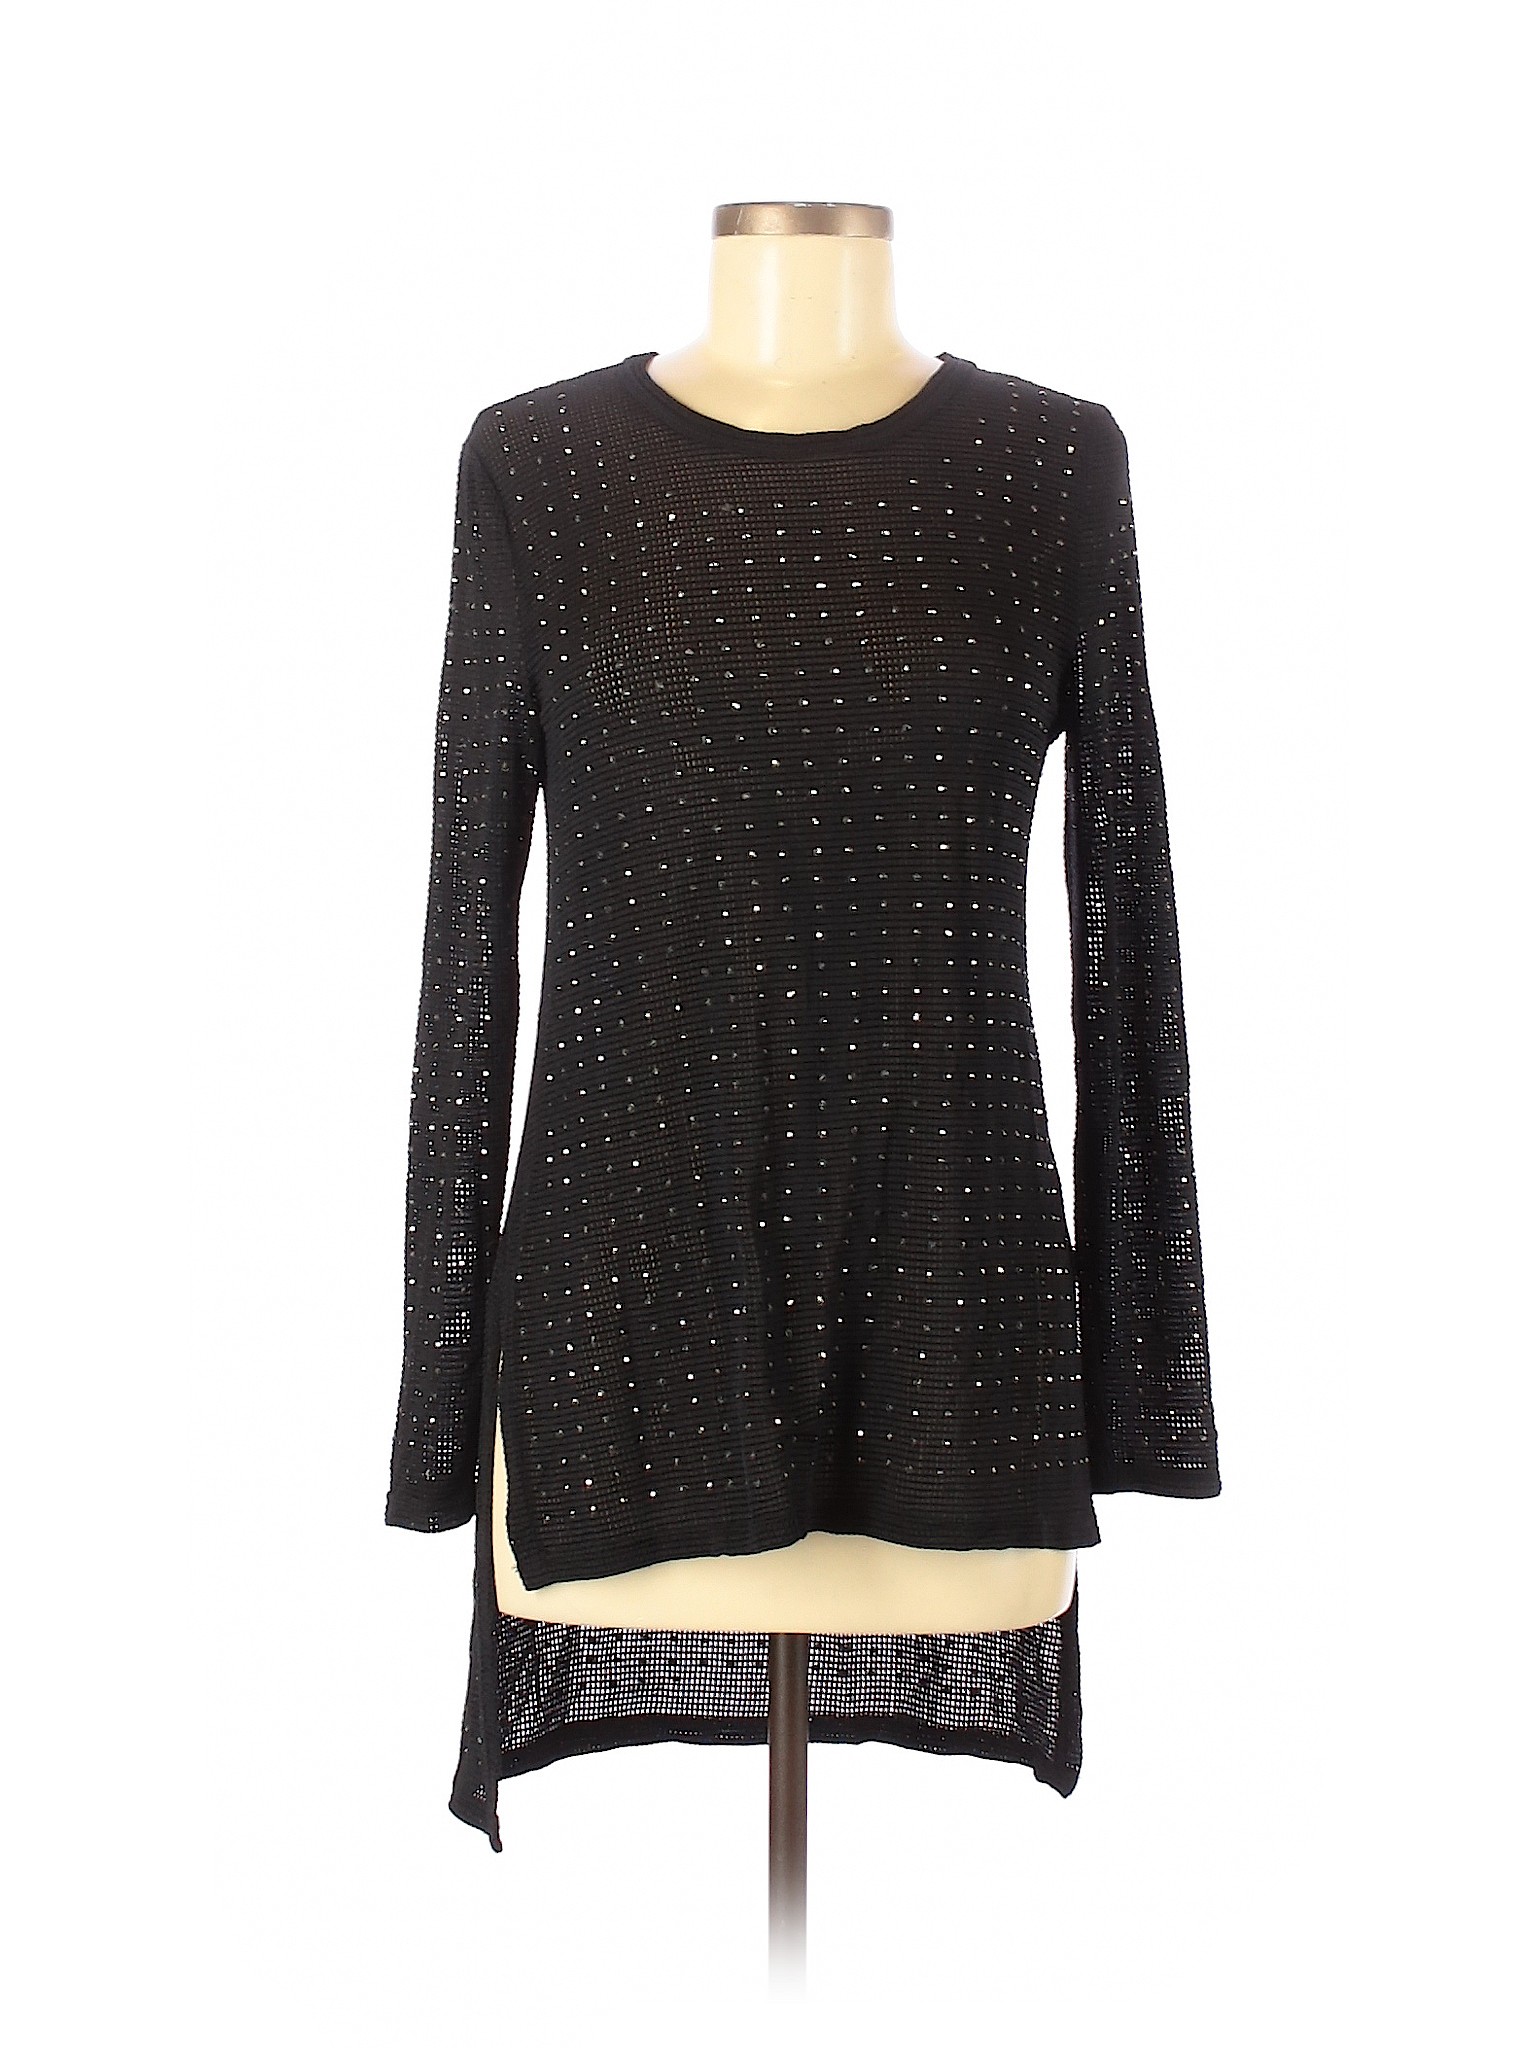 Frank Lyman Design Women Black Long Sleeve Top M | eBay